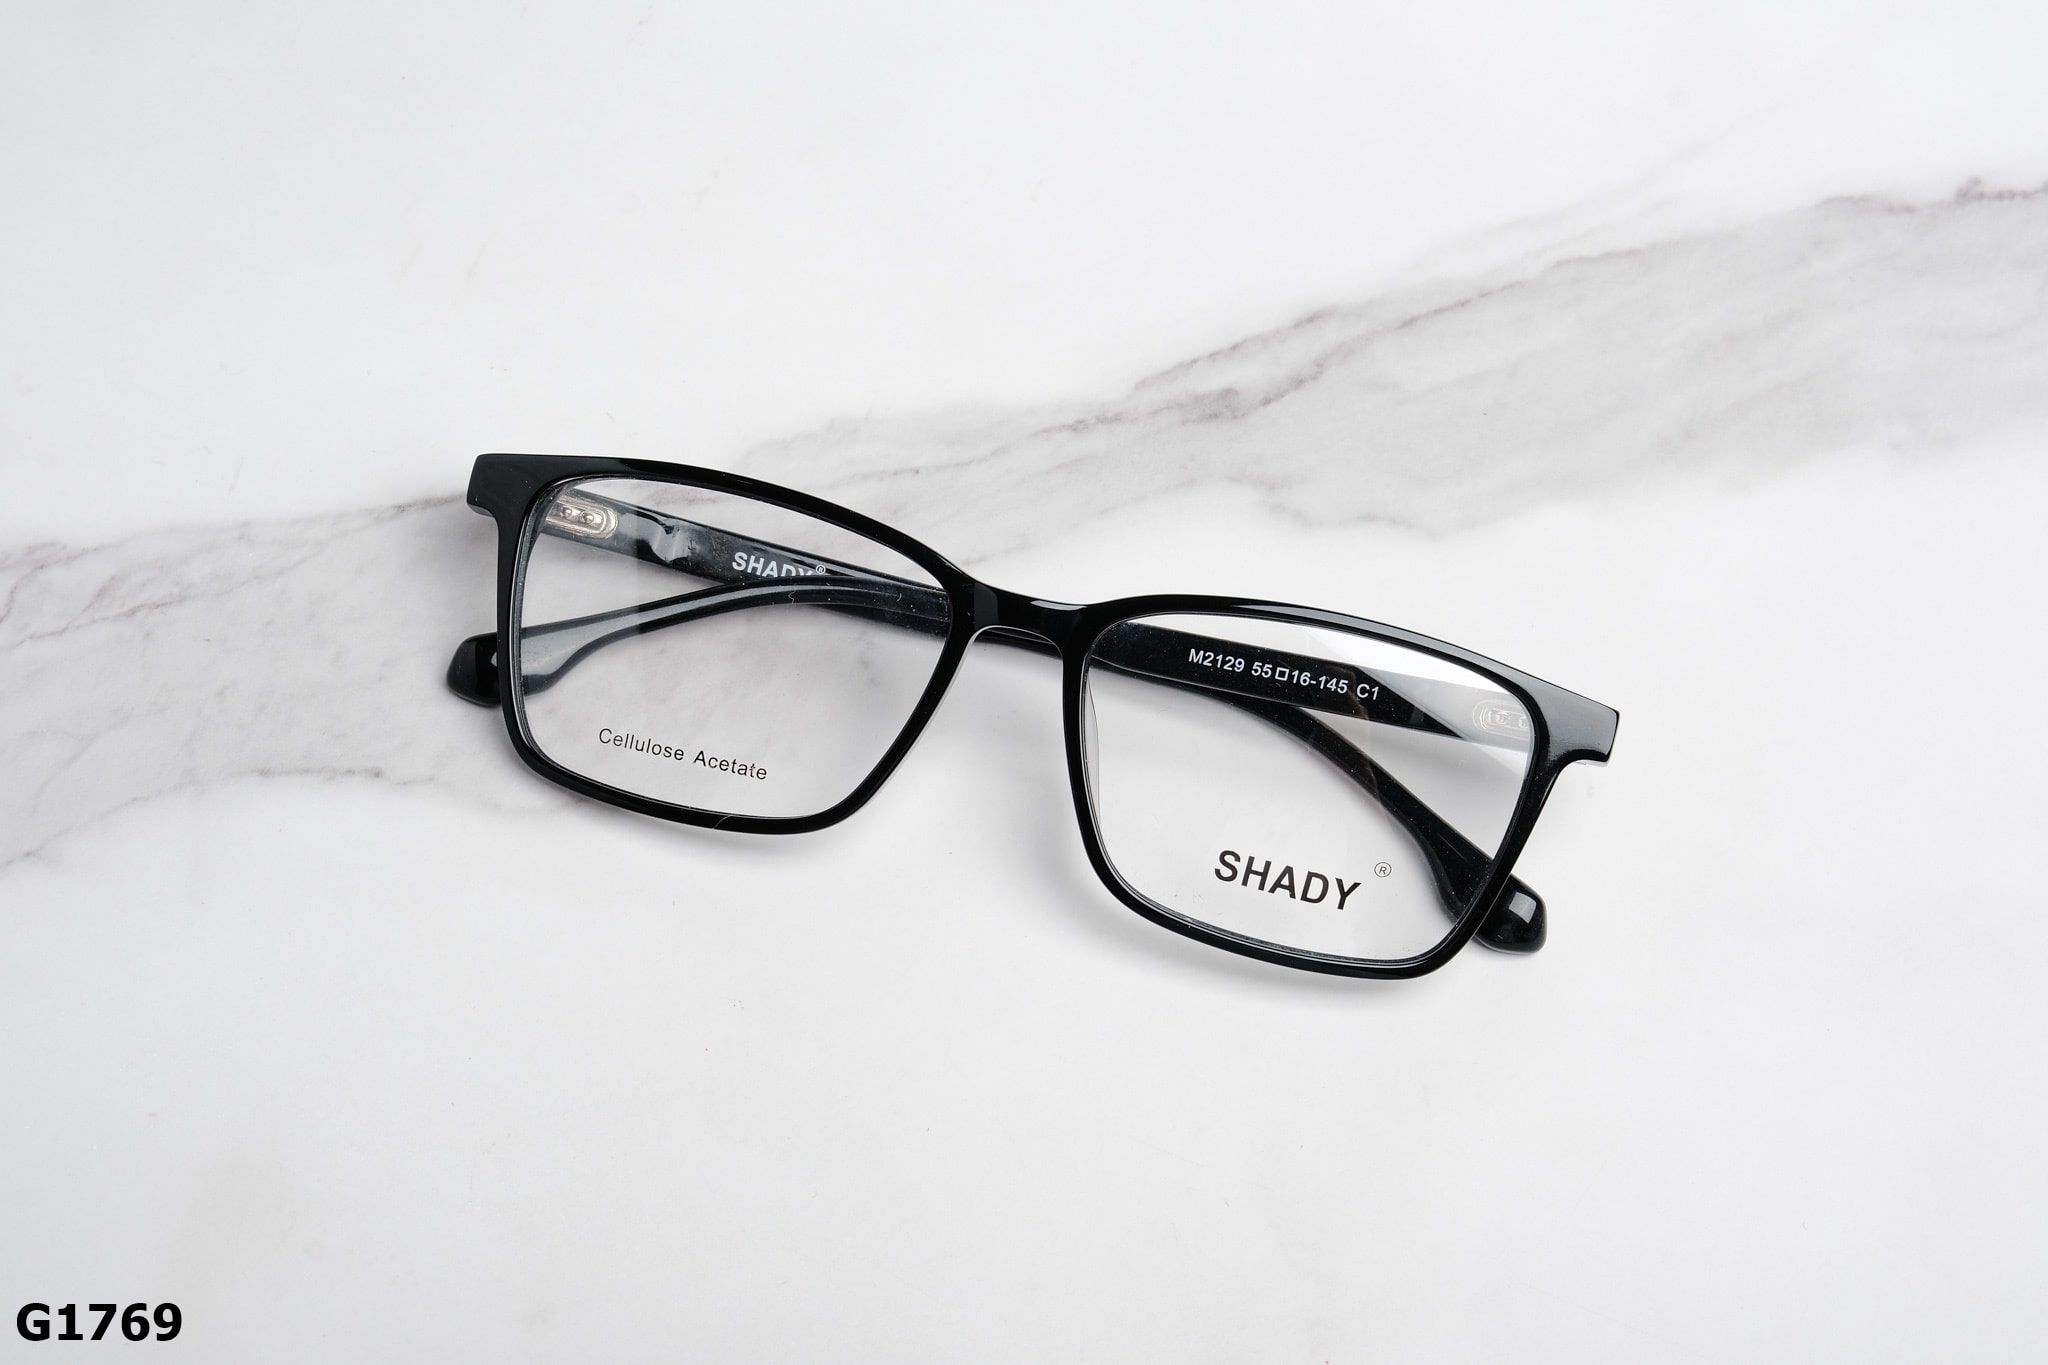  SHADY Eyewear - Glasses - G1769 